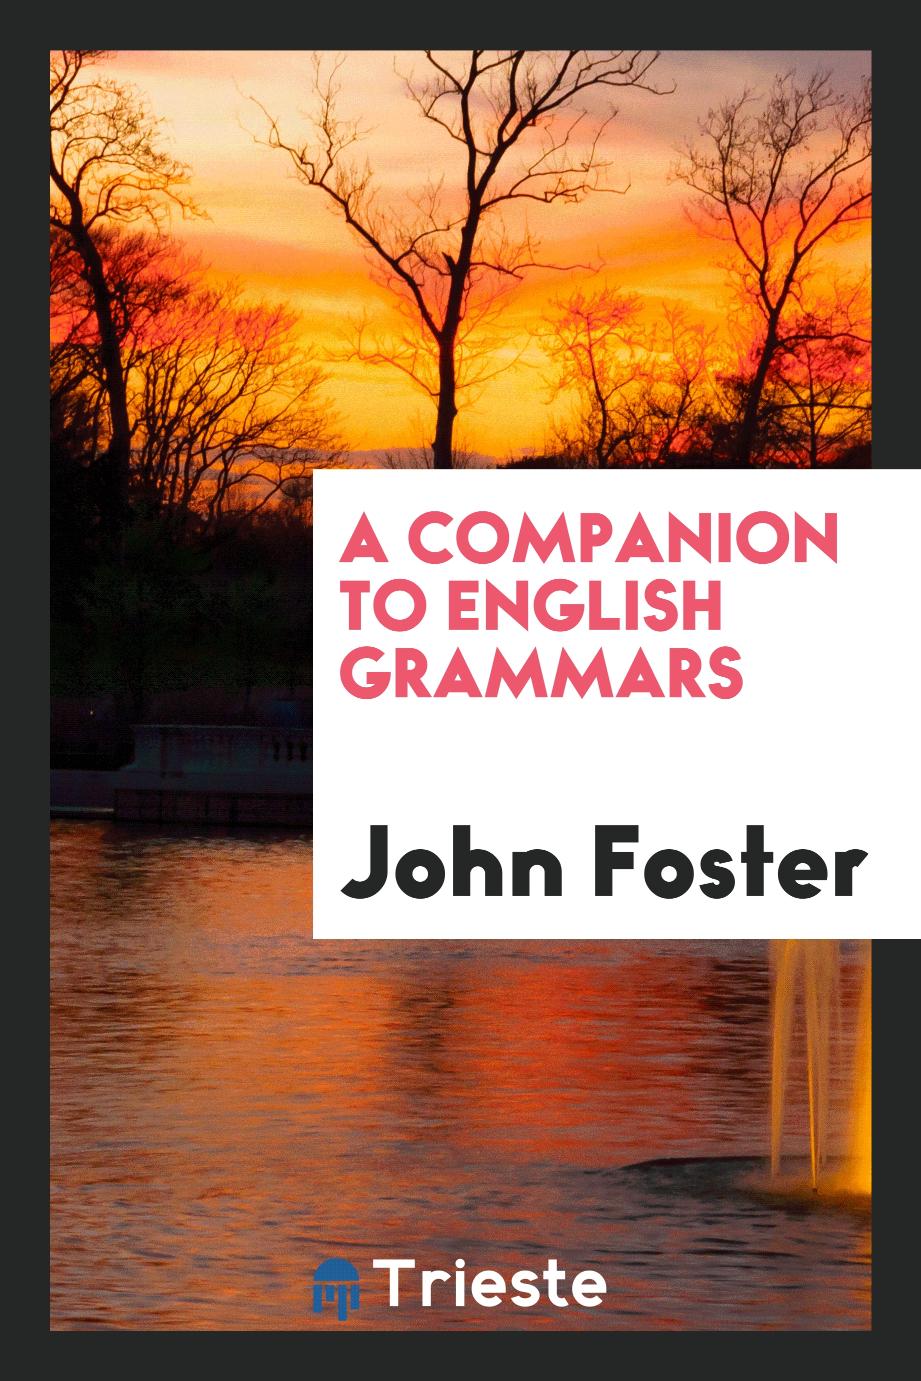 A Companion to English Grammars